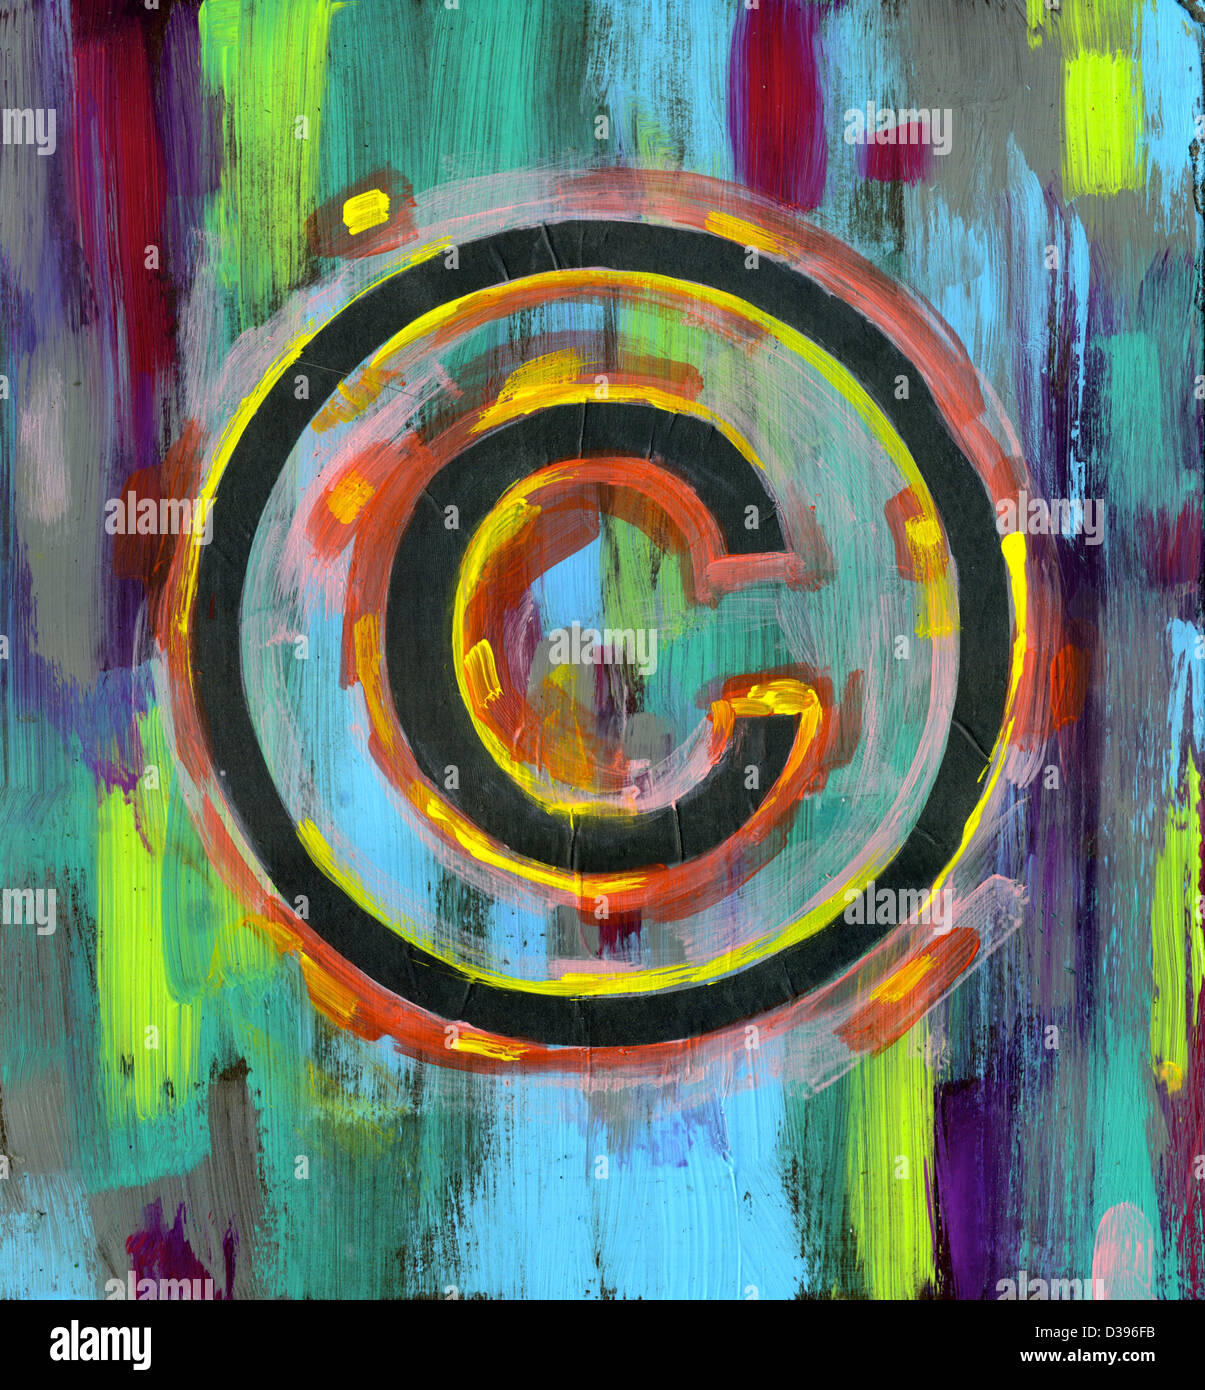 Illustrative image of copyright symbol over multi-colored background Stock Photo